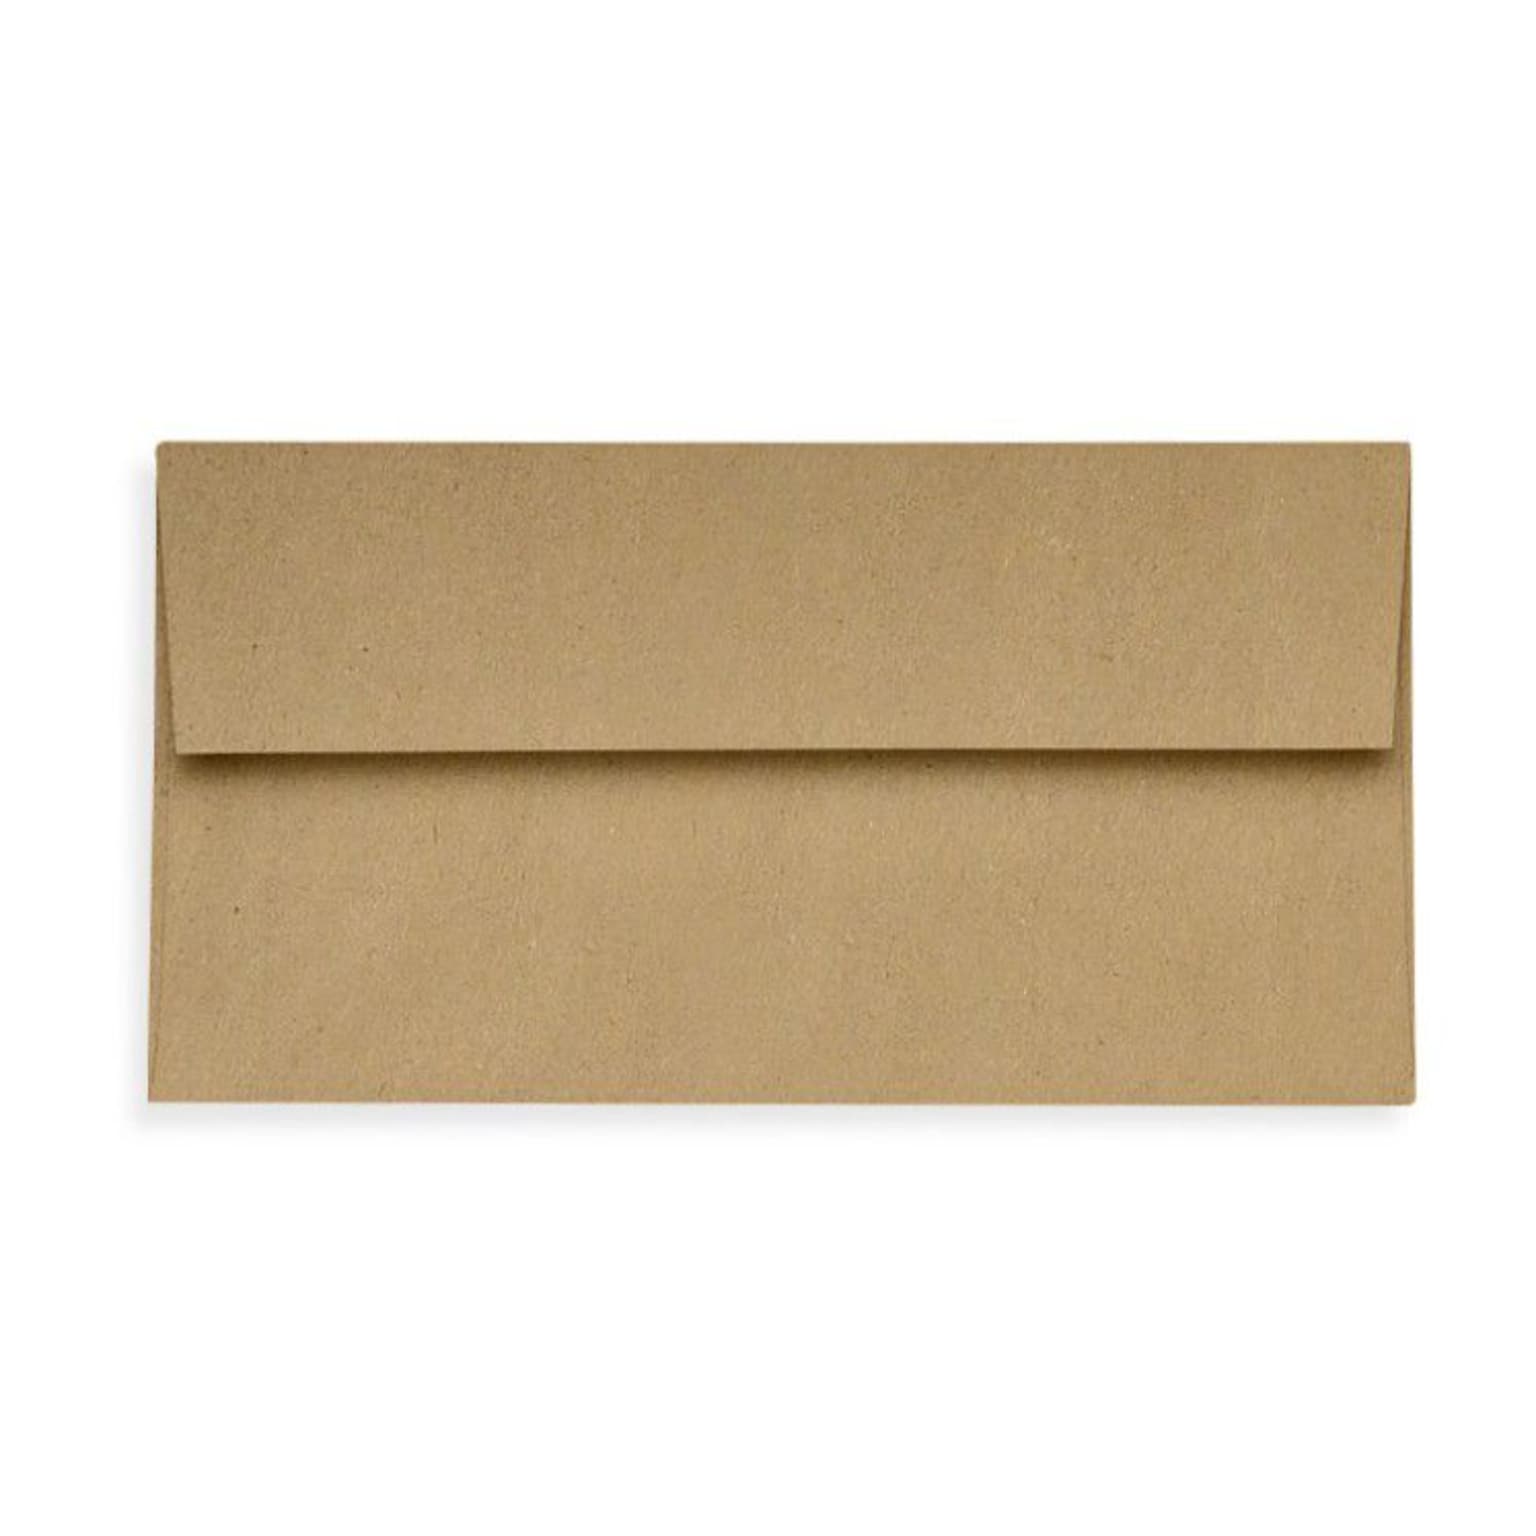 LUX Slimline Invitation Envelopes (3 7/8 x 8 7/8) 50/Box, Grocery Bag (72973-GB-50)